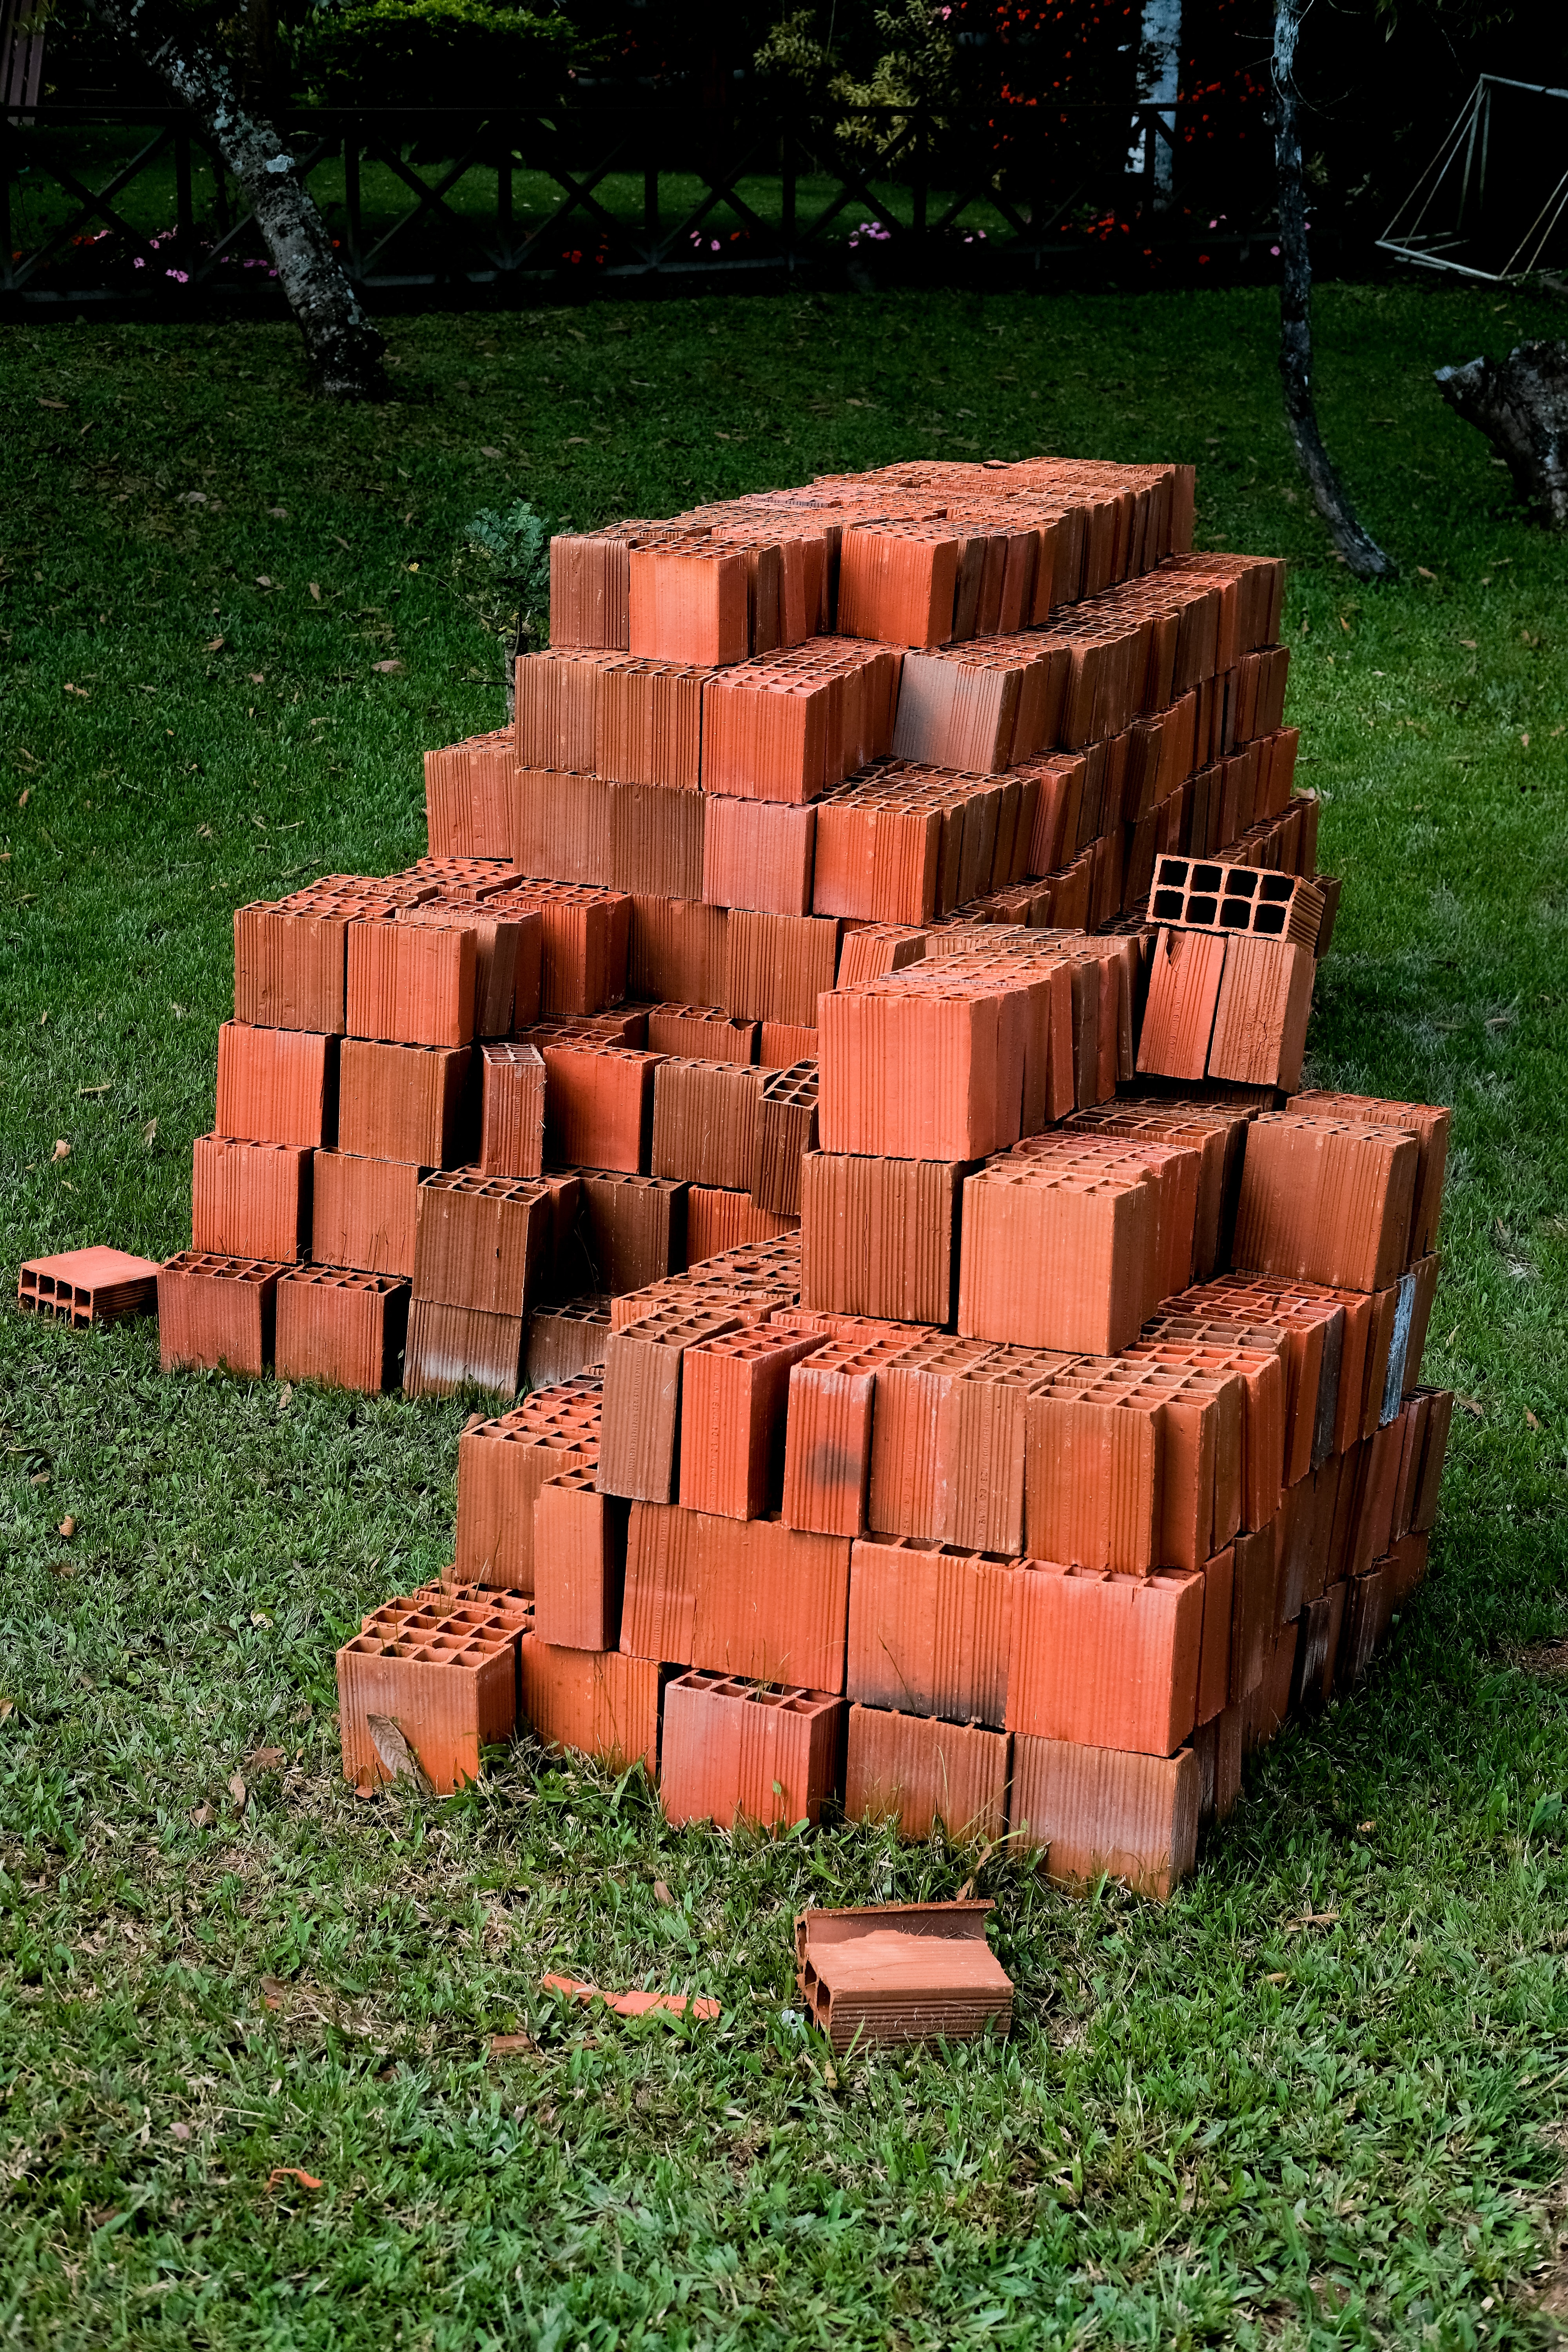 A pile of bricks. | Source: Unsplash